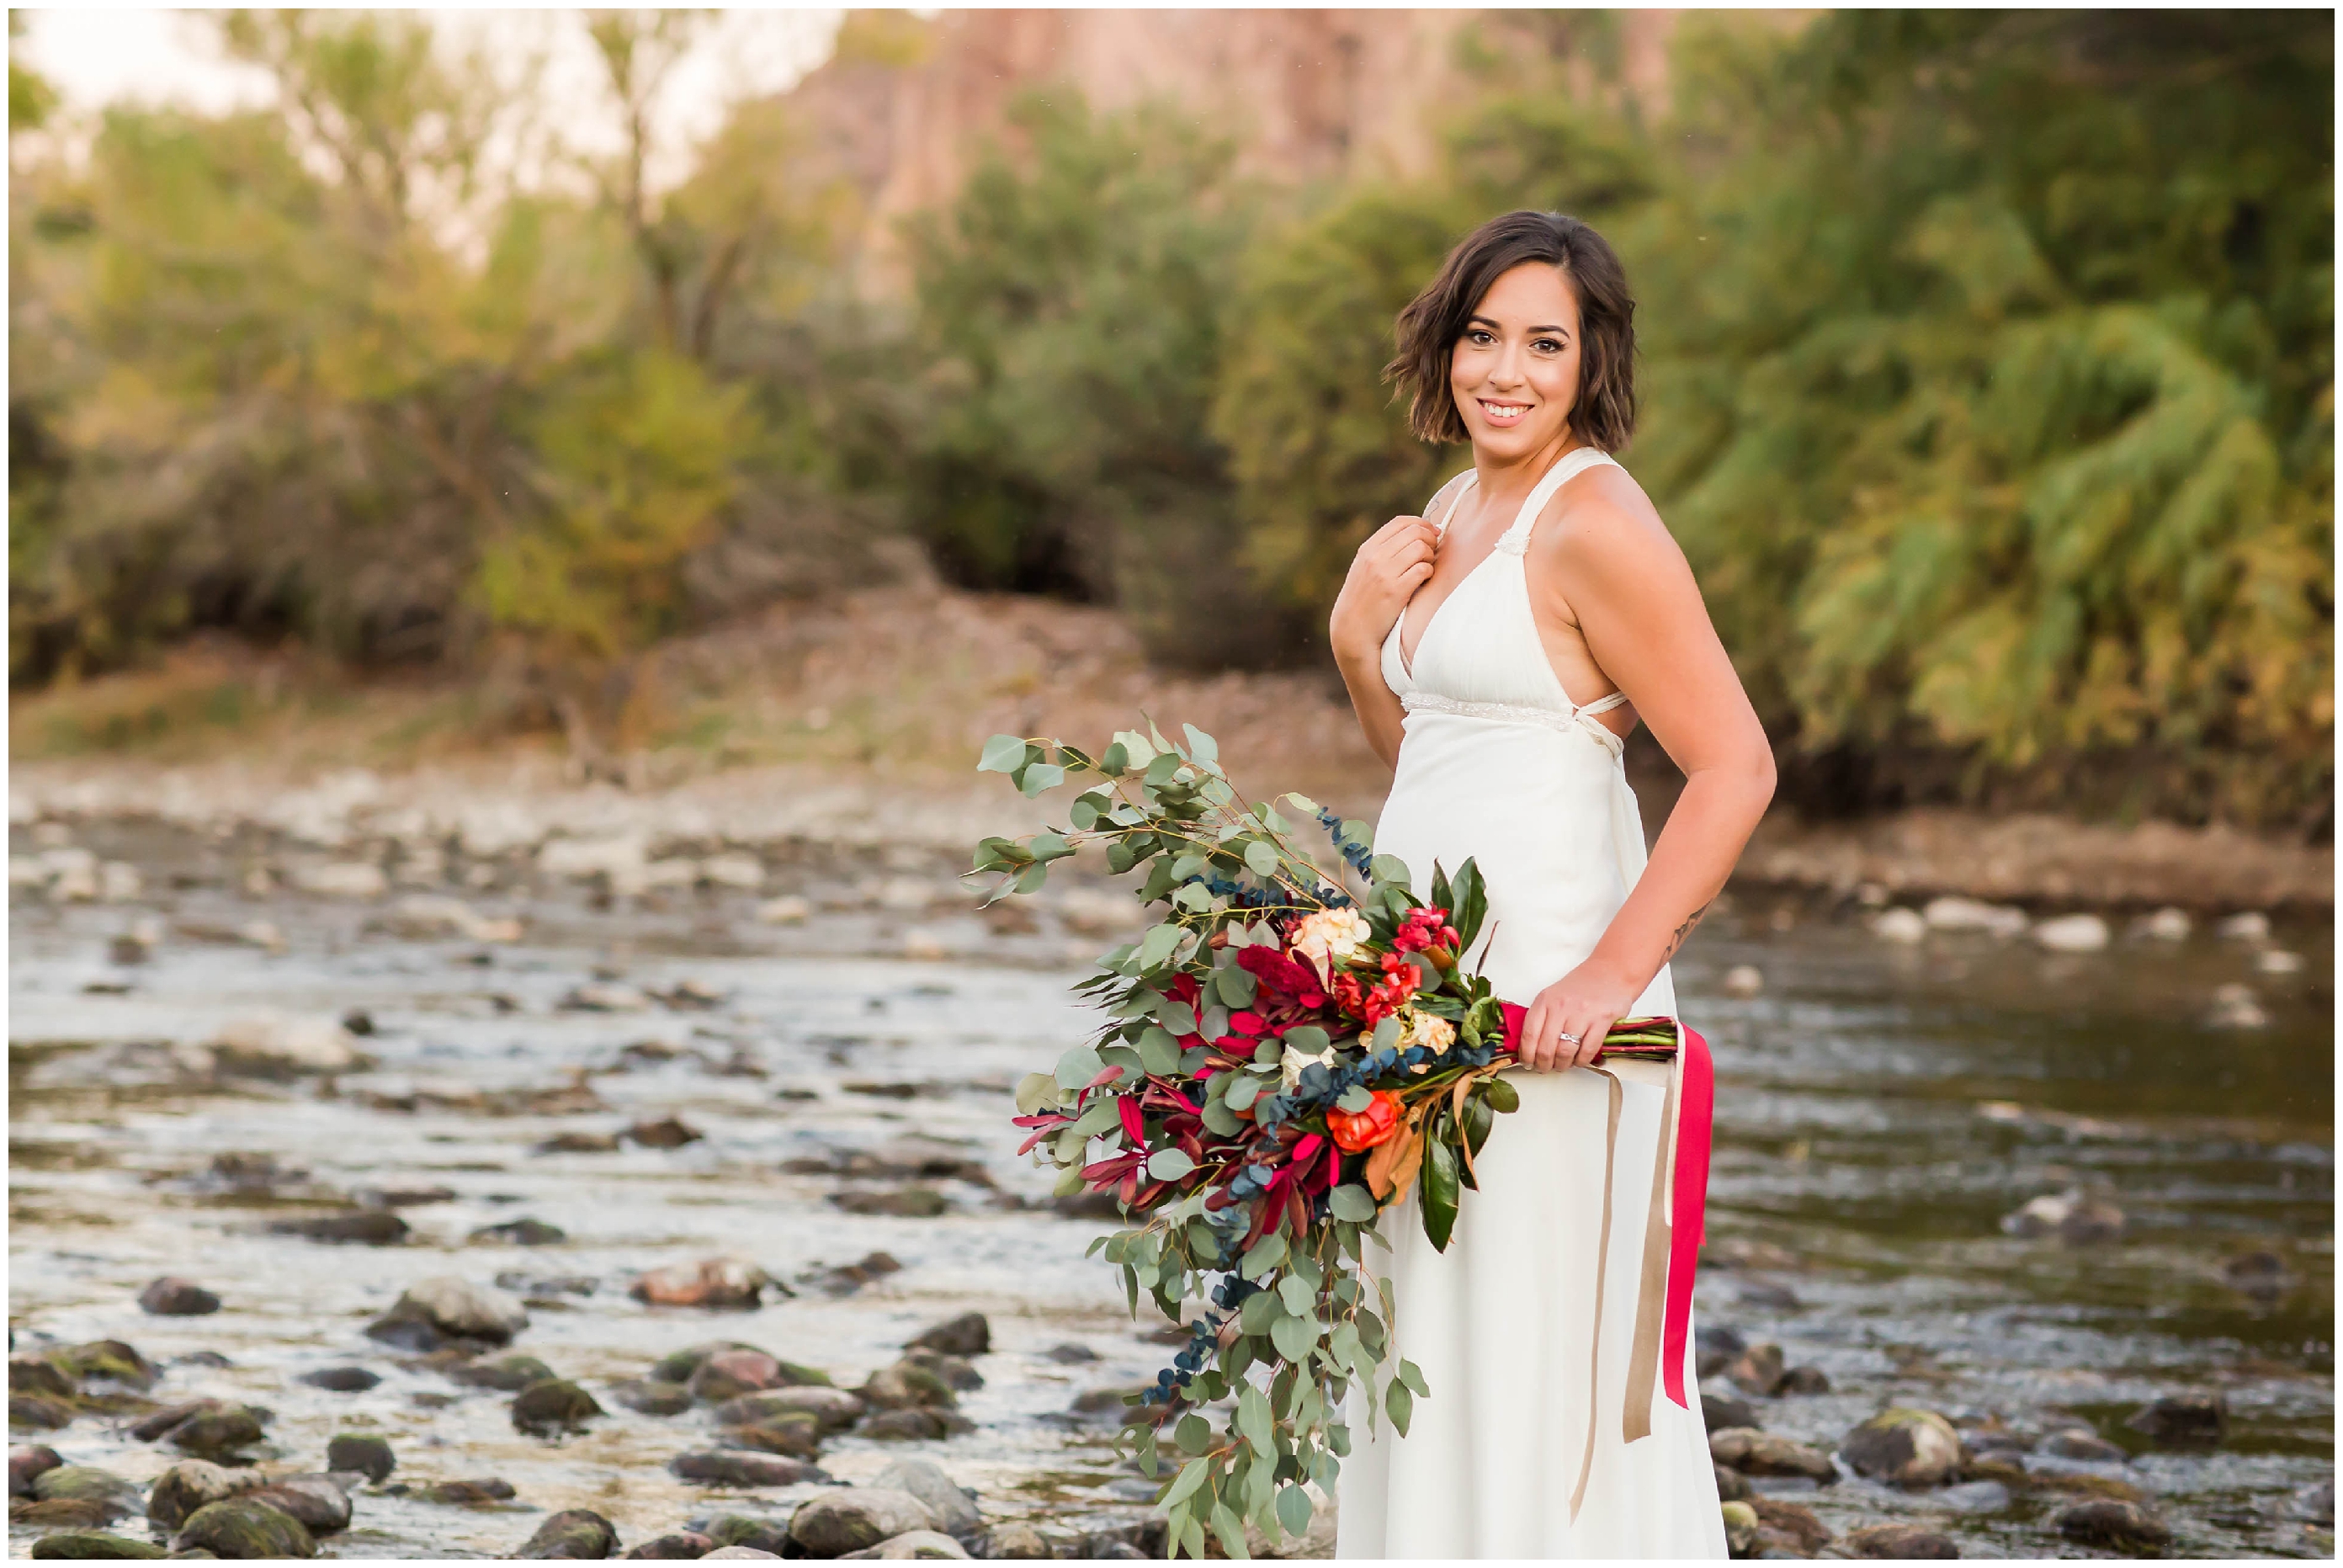 Arizona Wedding Photographer,Photographer Phoenix Arizona,loren jackson photography,saguaro lake wedding photos,